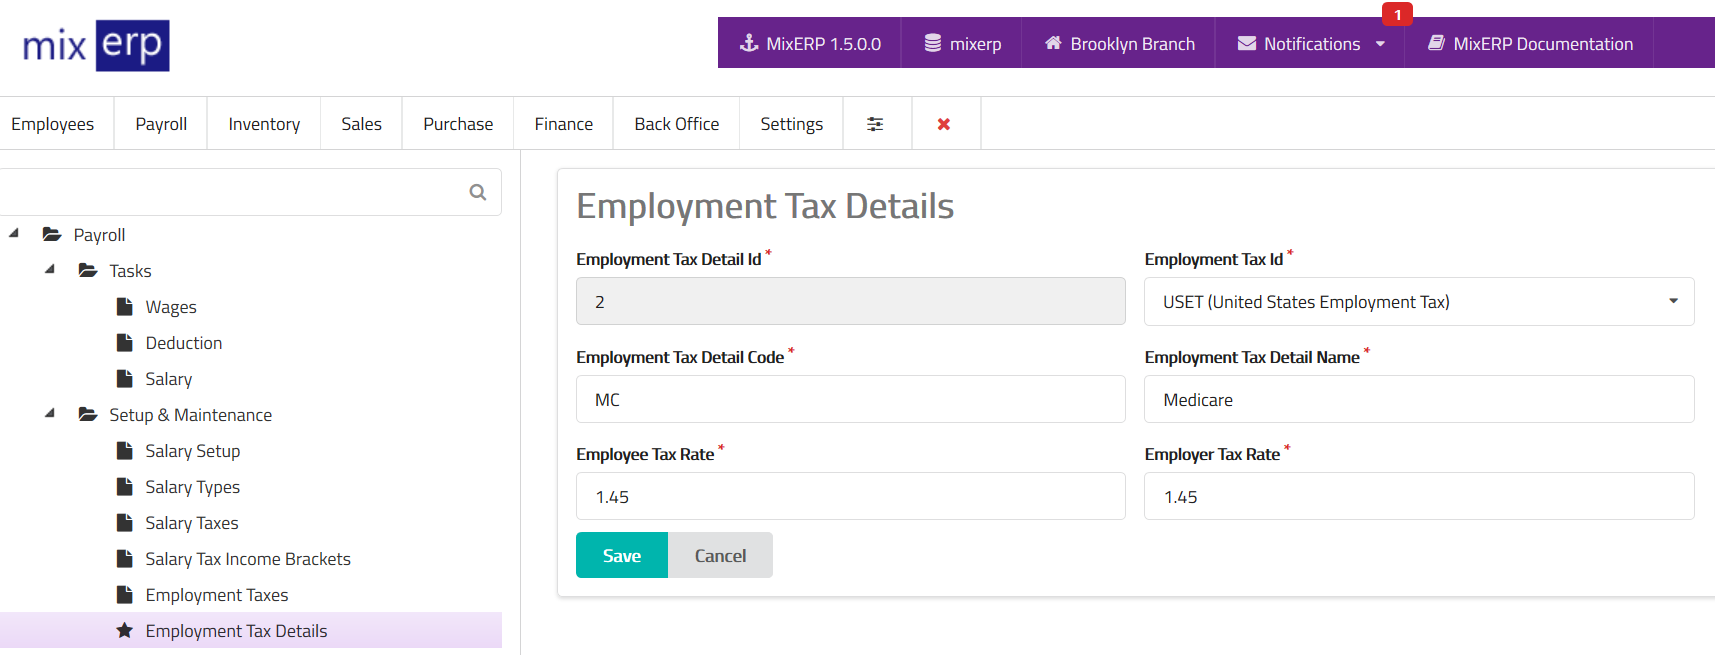 Employment Tax Details